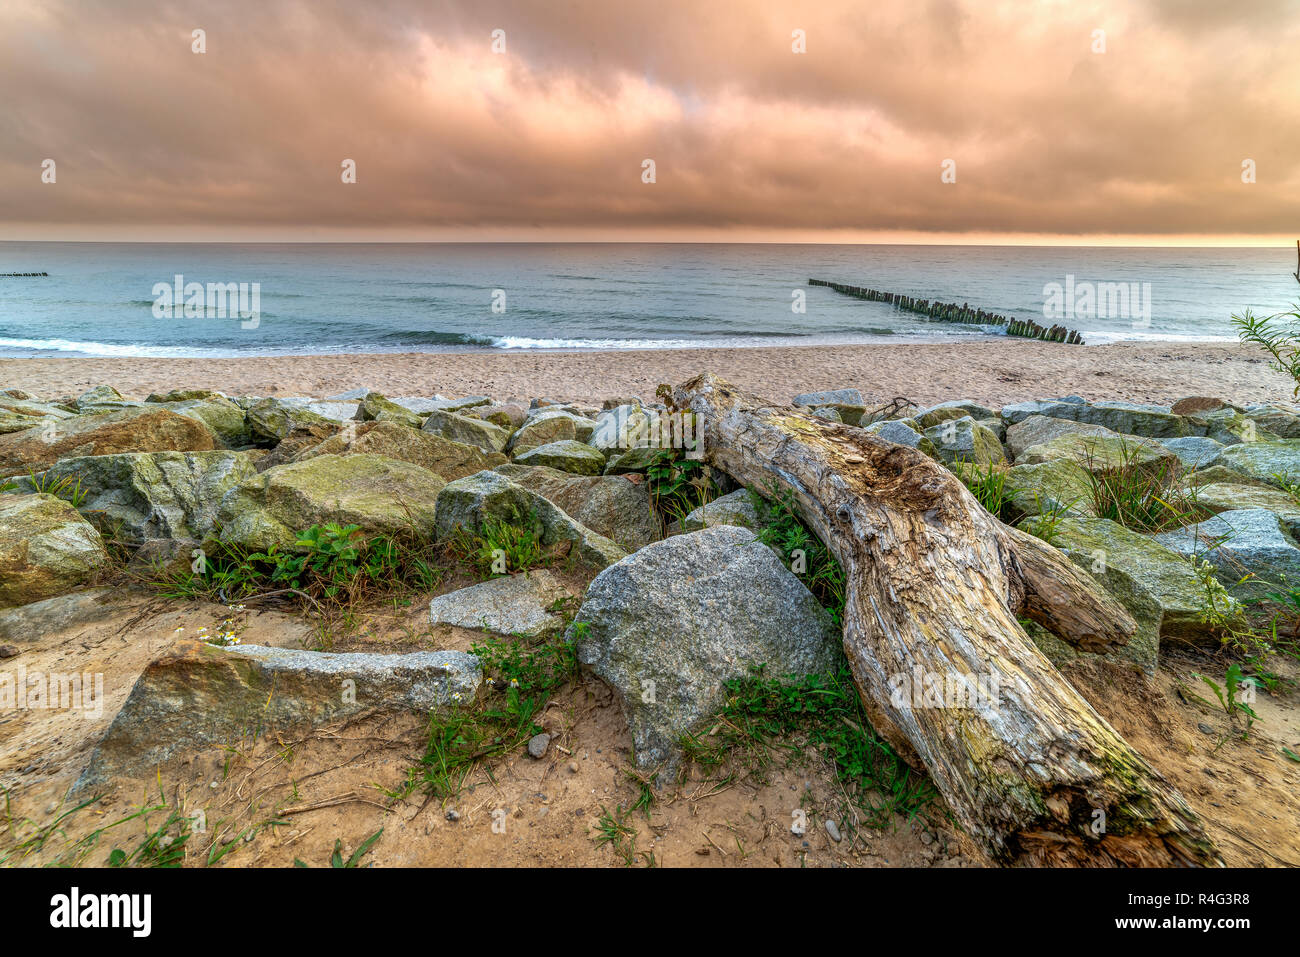 Landschaft am Meer, Holz, Steine, Sand, Wellen. orange bewölkter Himmel Stockfoto